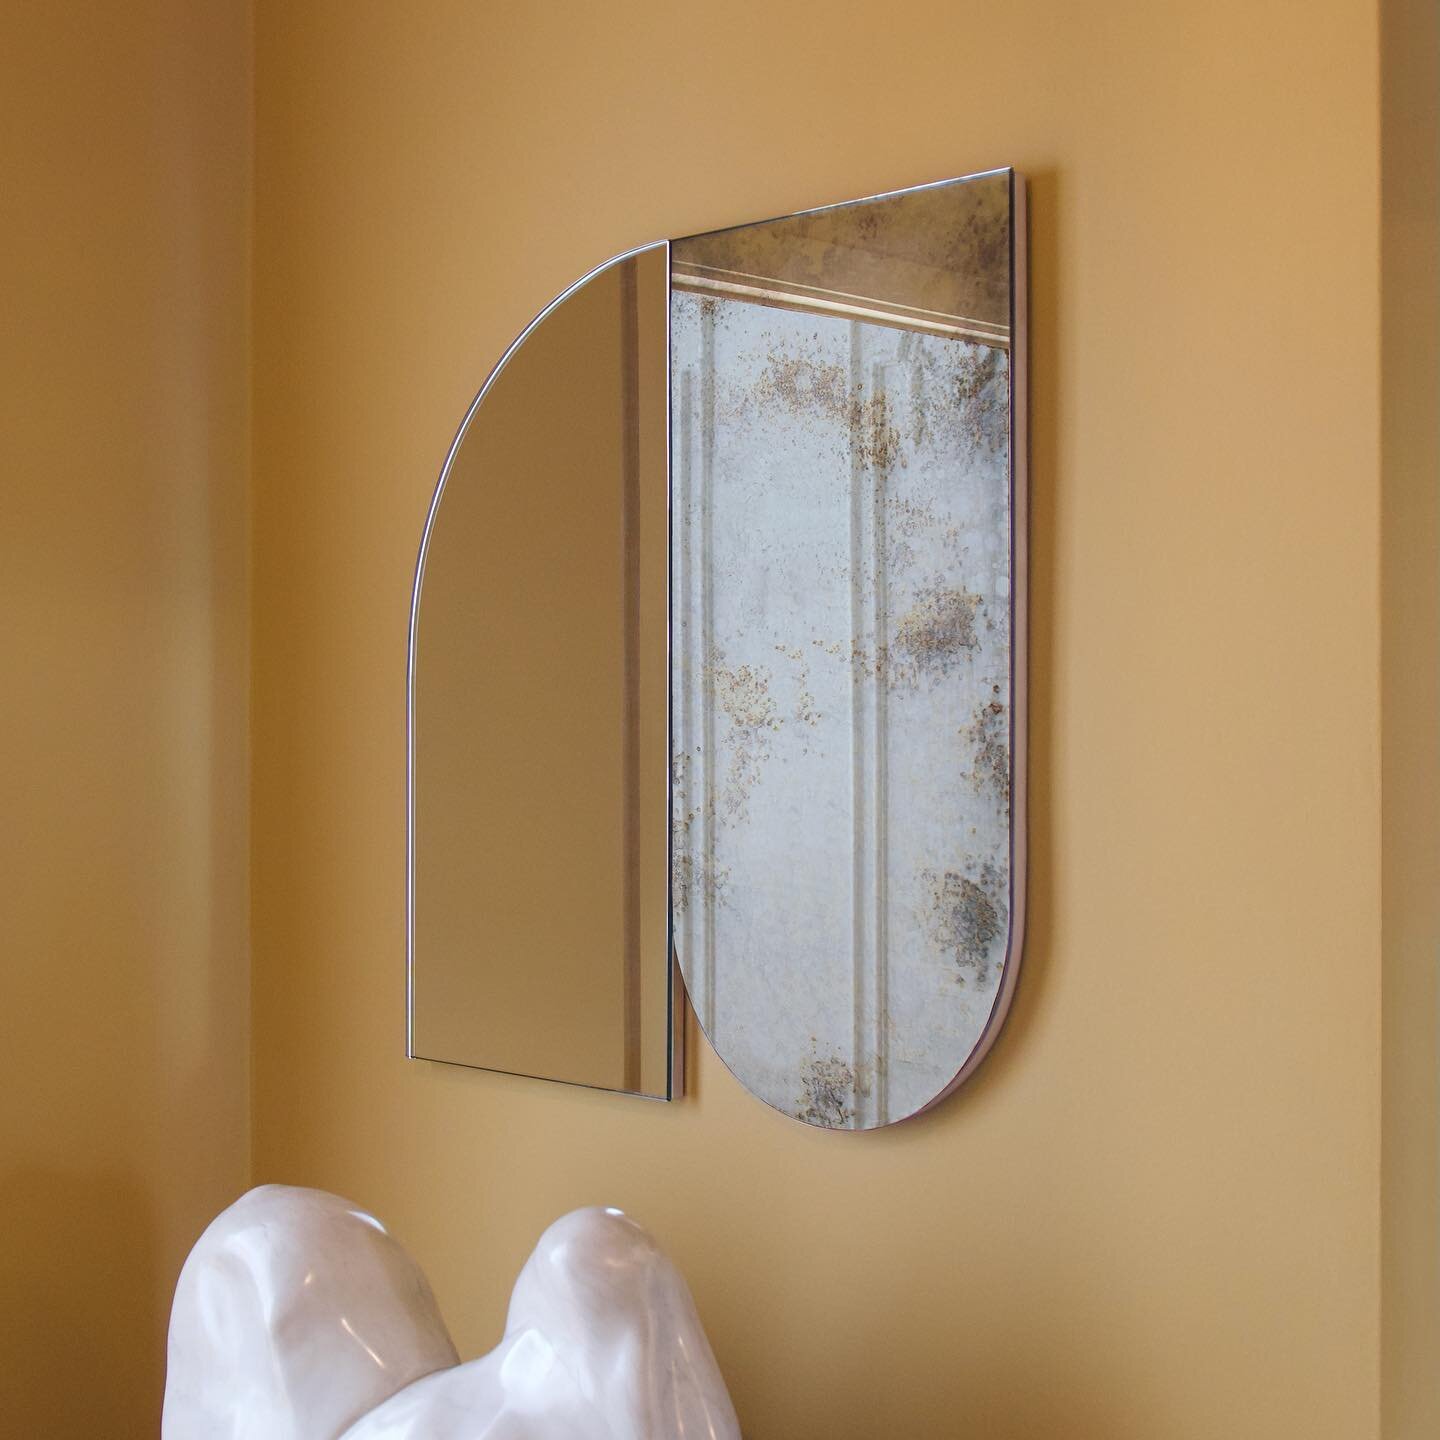 curvalicious
new ESTHER mirror
now available + in stock

#mirror #mirrors #mirrorart&nbsp;&nbsp;#mirrordesign #mirrormirror #designmaker #collectibledesign #moderndesign #luxuryinteriors #functionalart #designgallery #LAmaker #losangelesartist